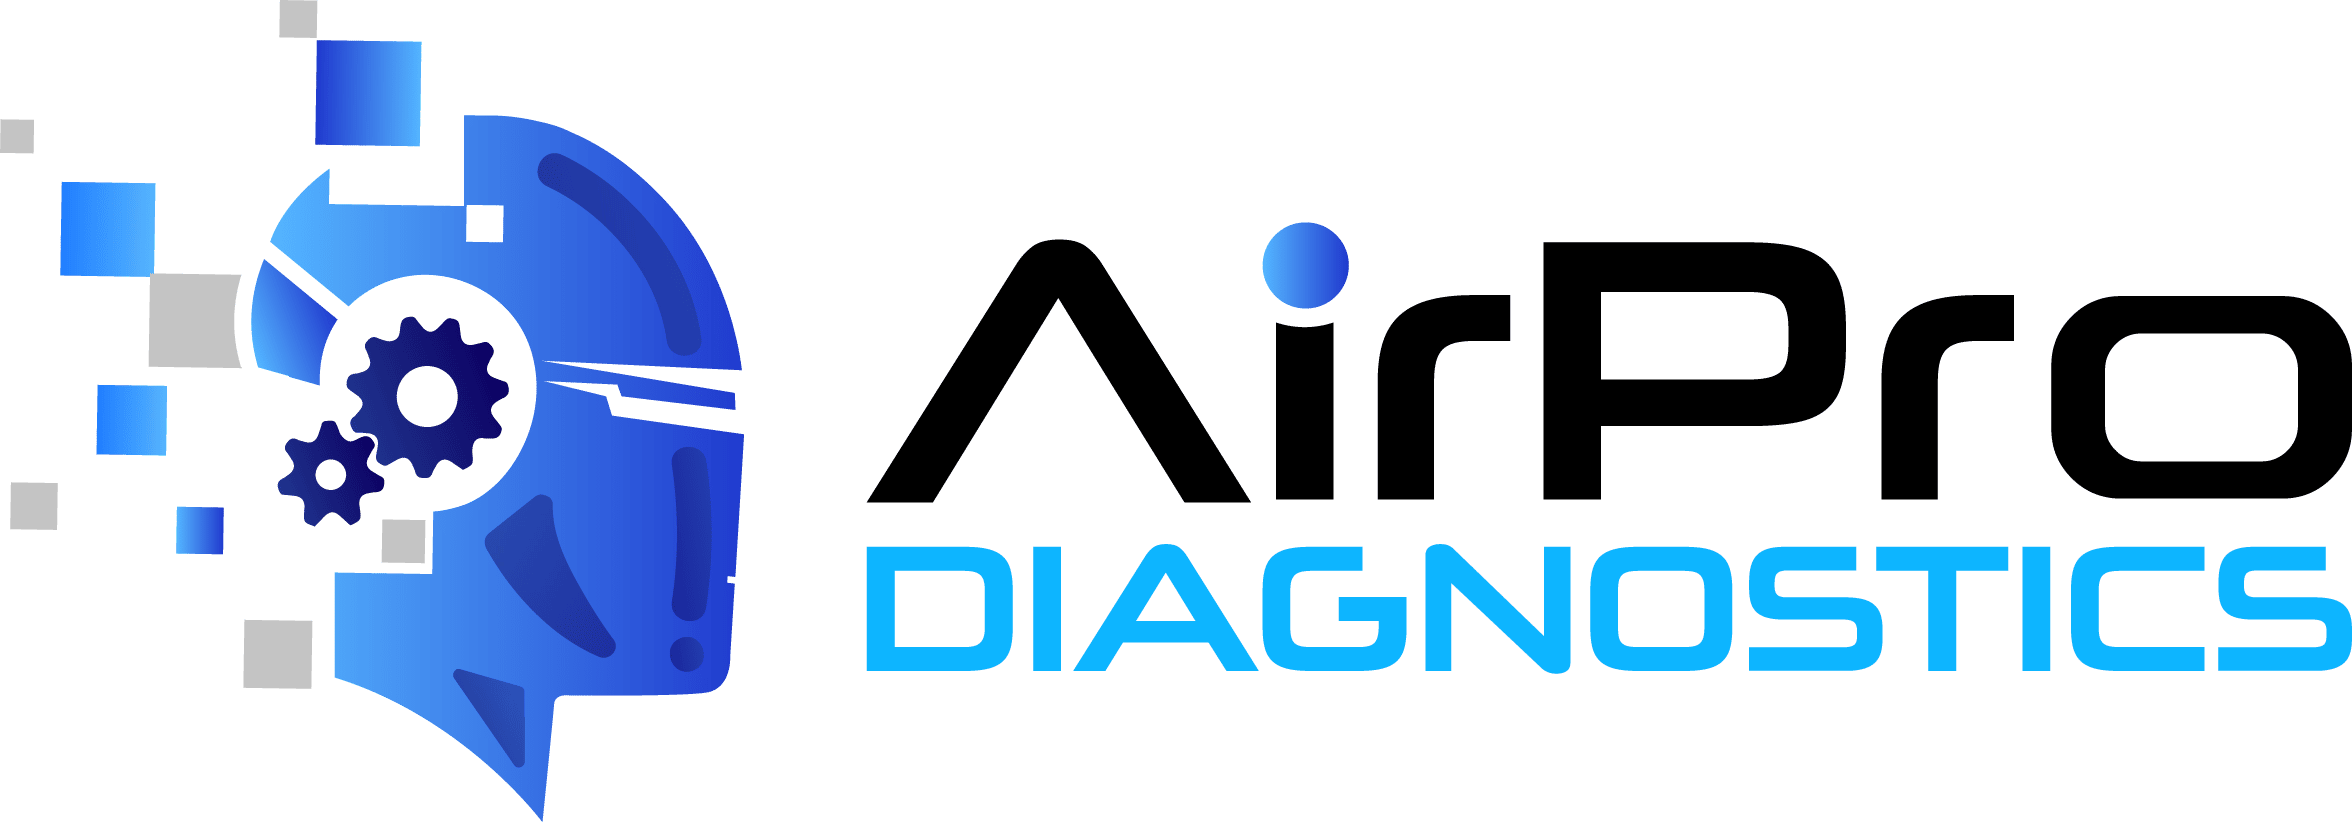 AirPro Diagnostics | Remote Diagnostics & ADAS Scanning | Ted McClintic Joins AirPro Diagnostics | AirPro Diagnostics | Remote Diagnostics & ADAS Scanning